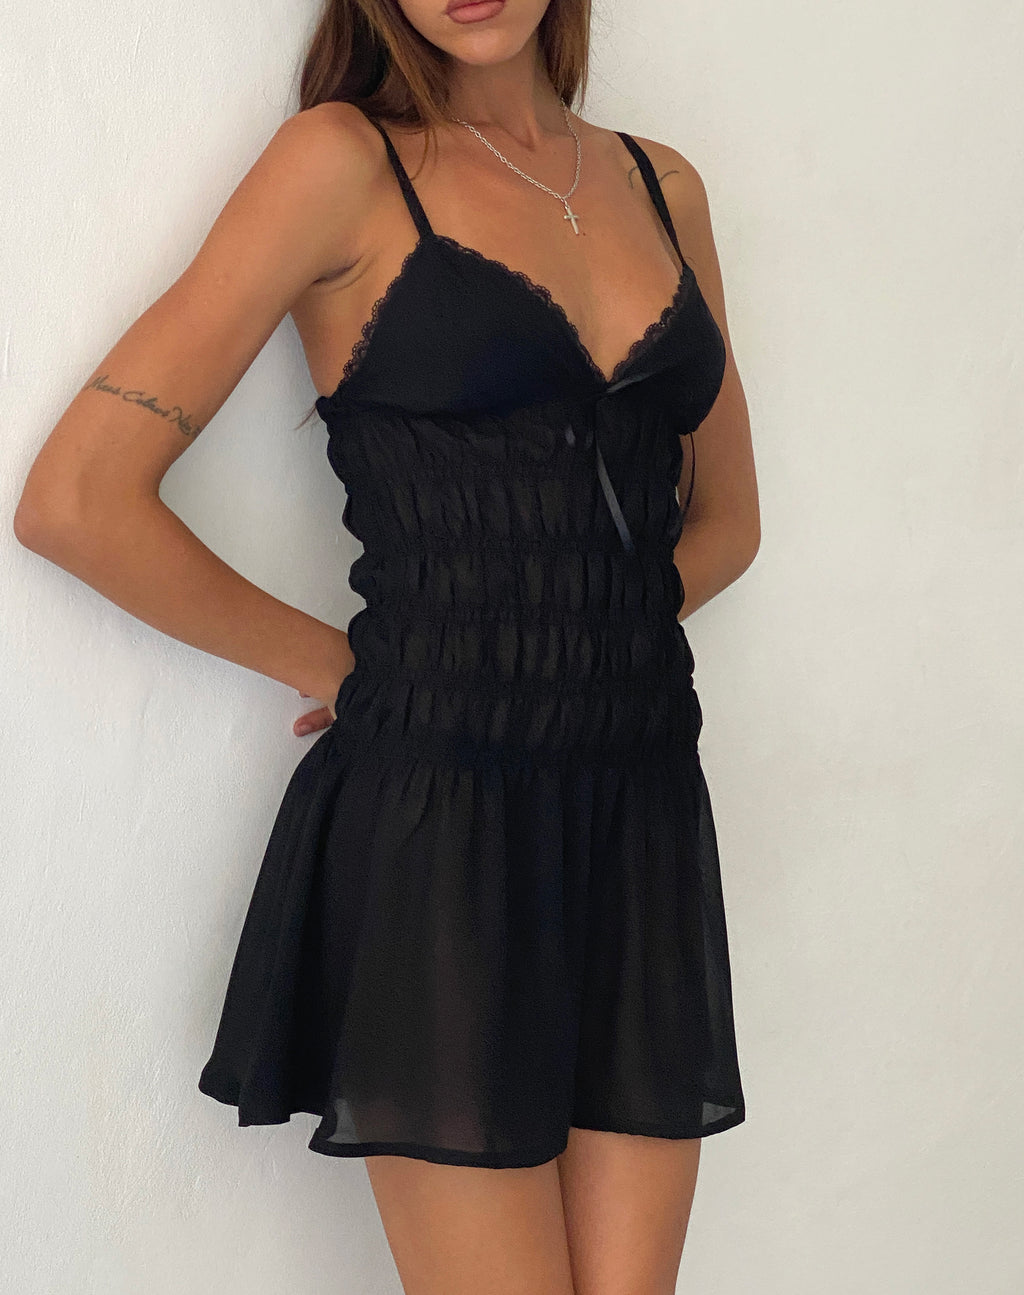 Axely Shirred Mini Dress in Chiffon Black